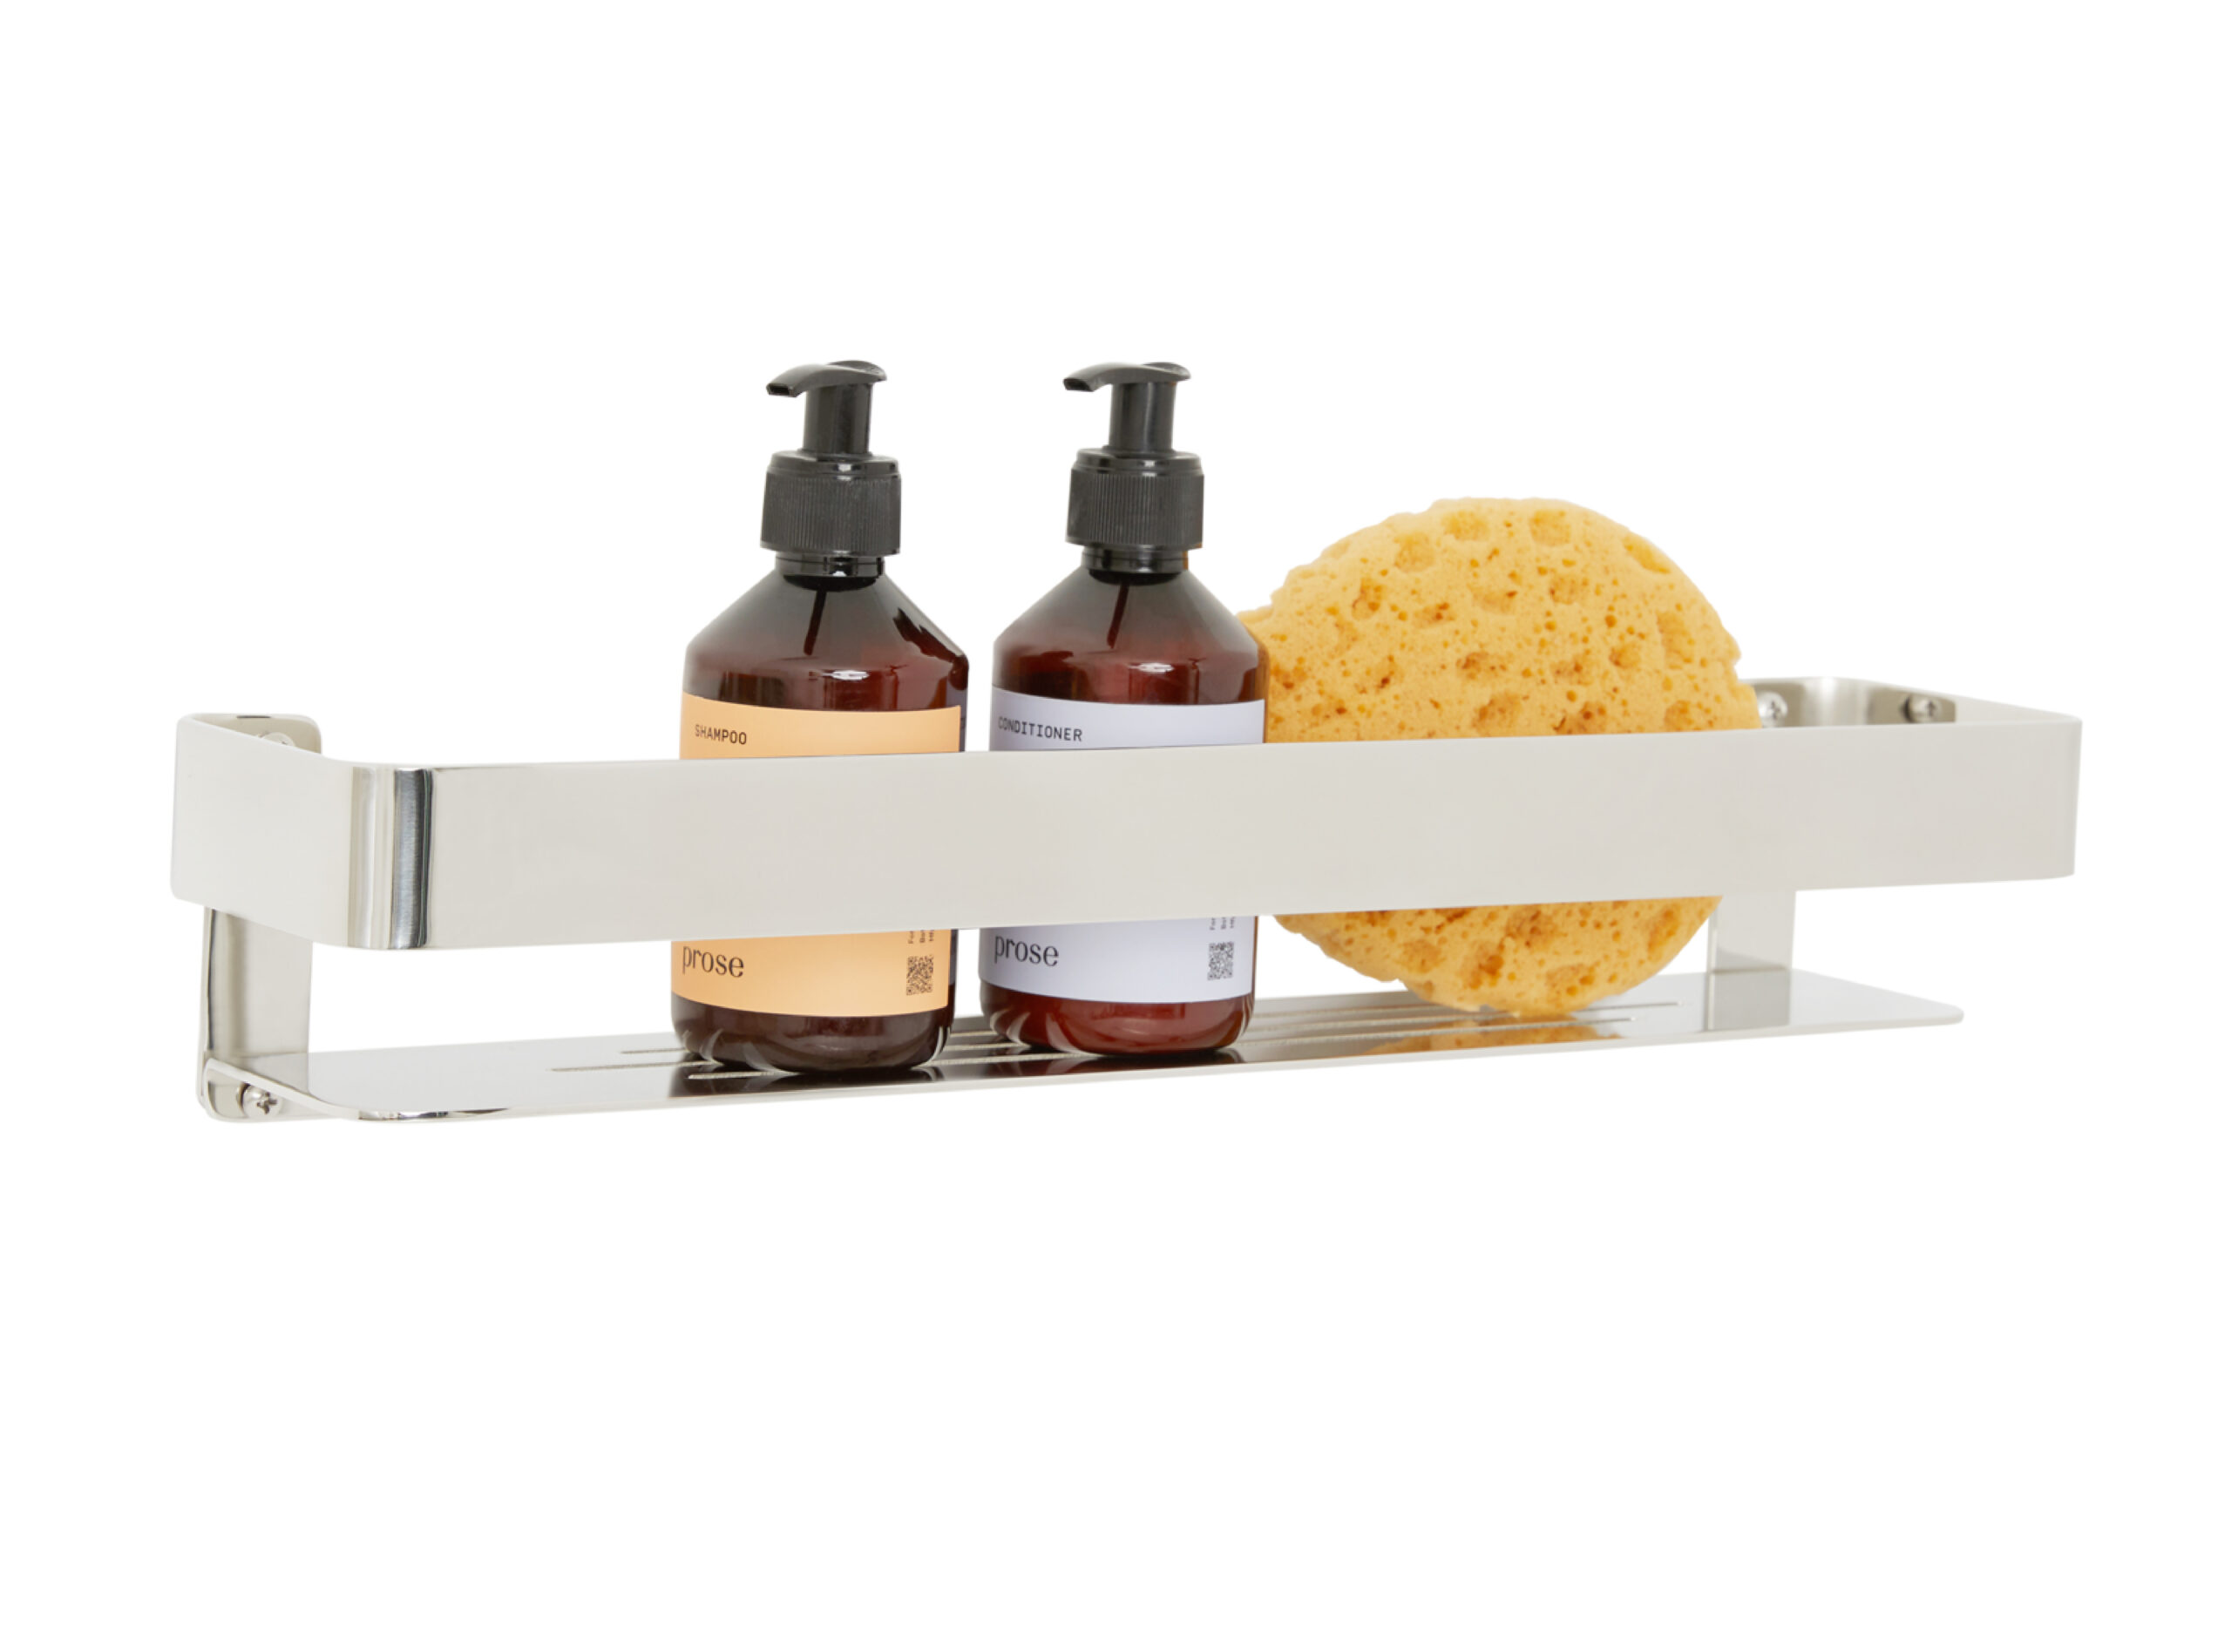 Acrylic Shower Caddy Shelves, Clear Slanted Shampoo Holder, Wall